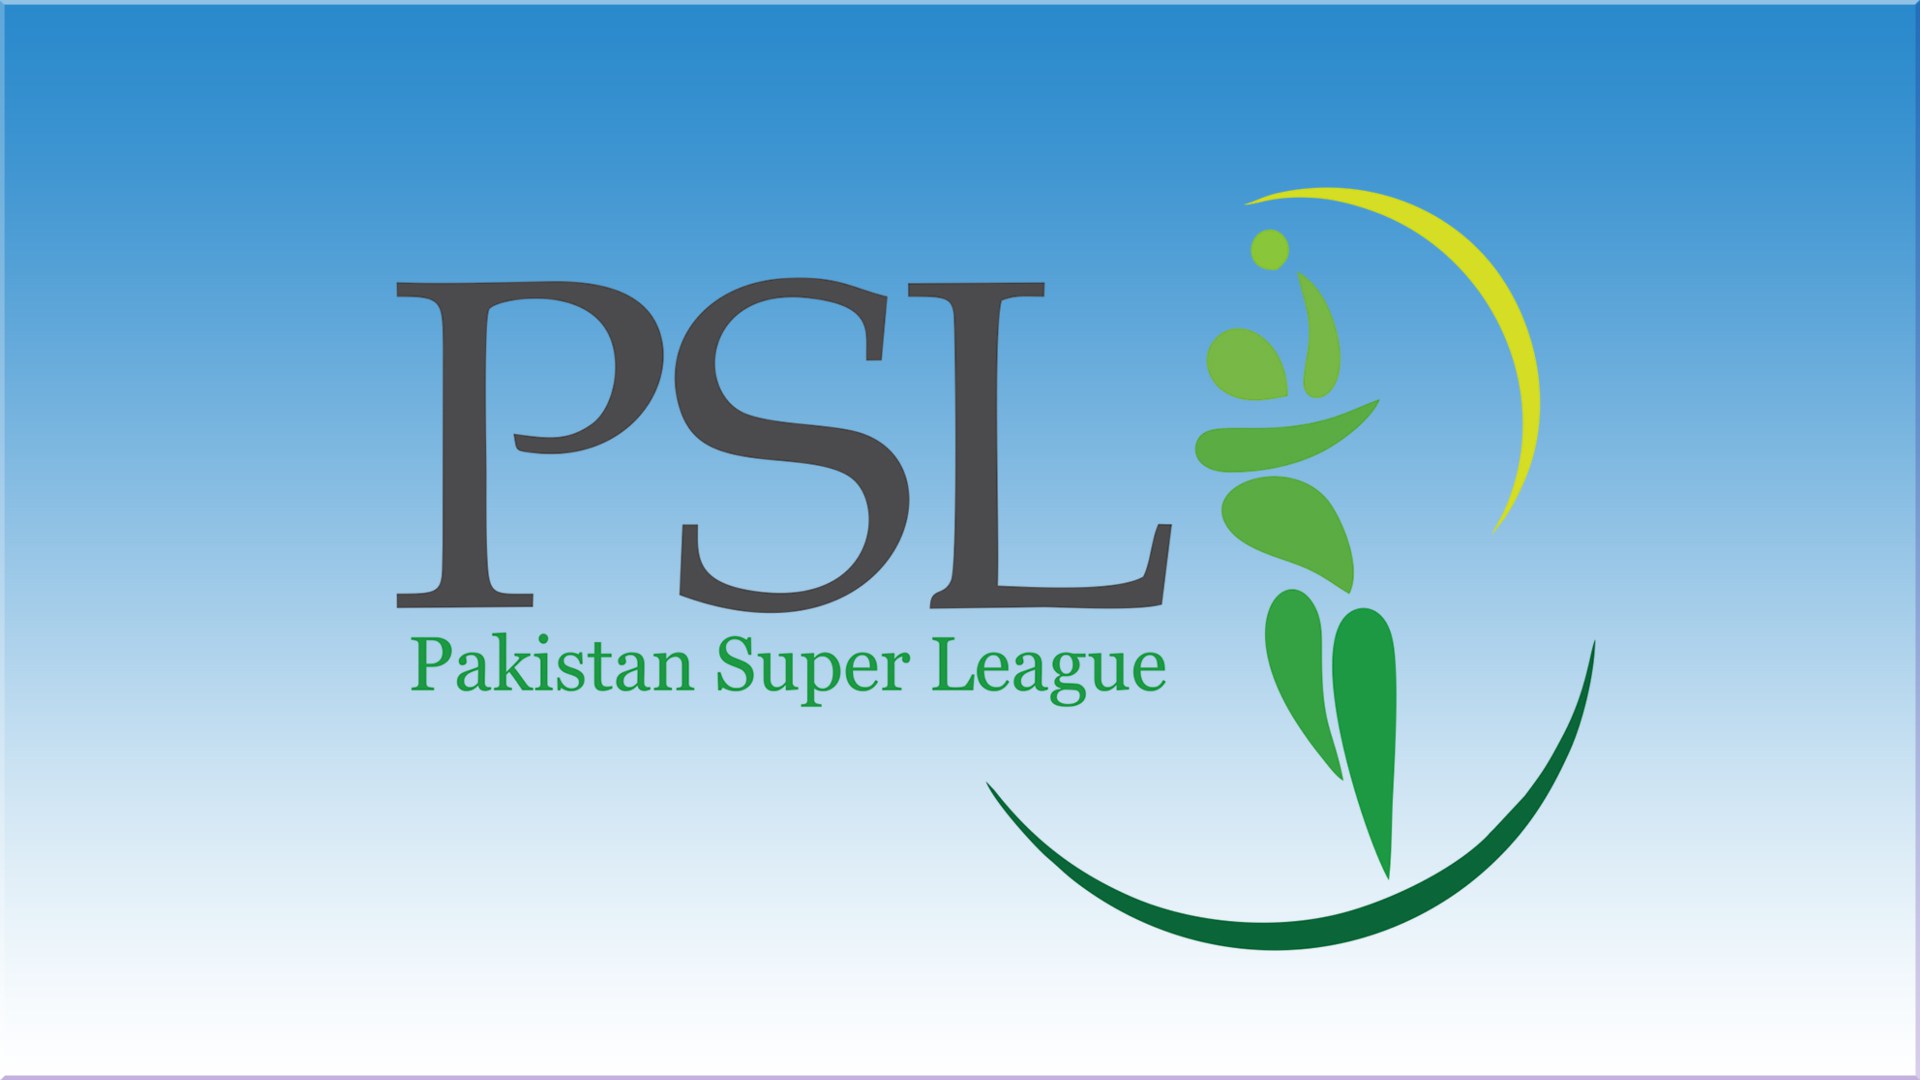 Peshawar Pakistan Super League HD Wallpaper